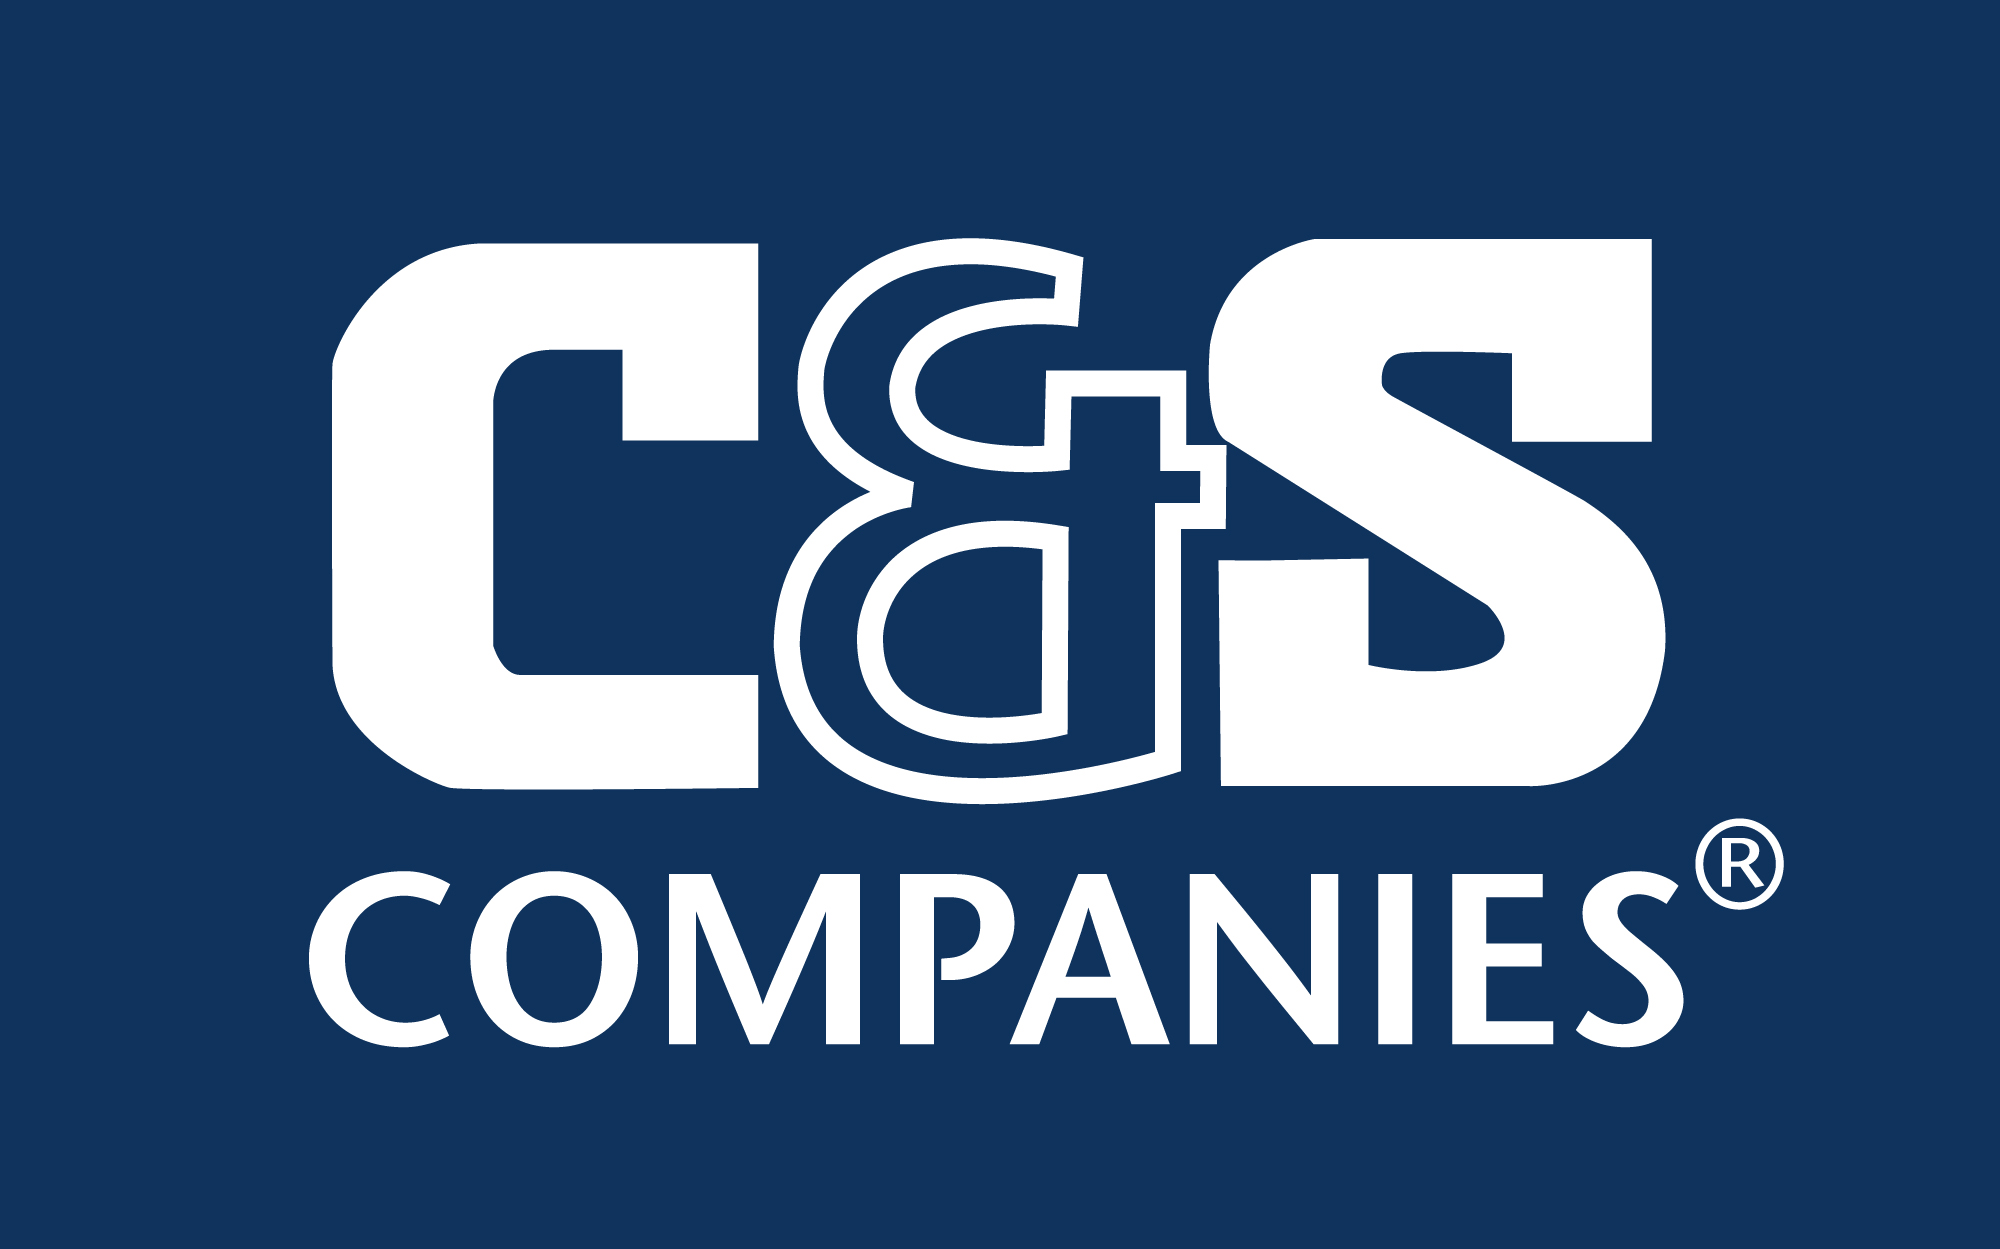 O s co. S&co логотип. 2s Компани. Компани s3. Corporation&co.